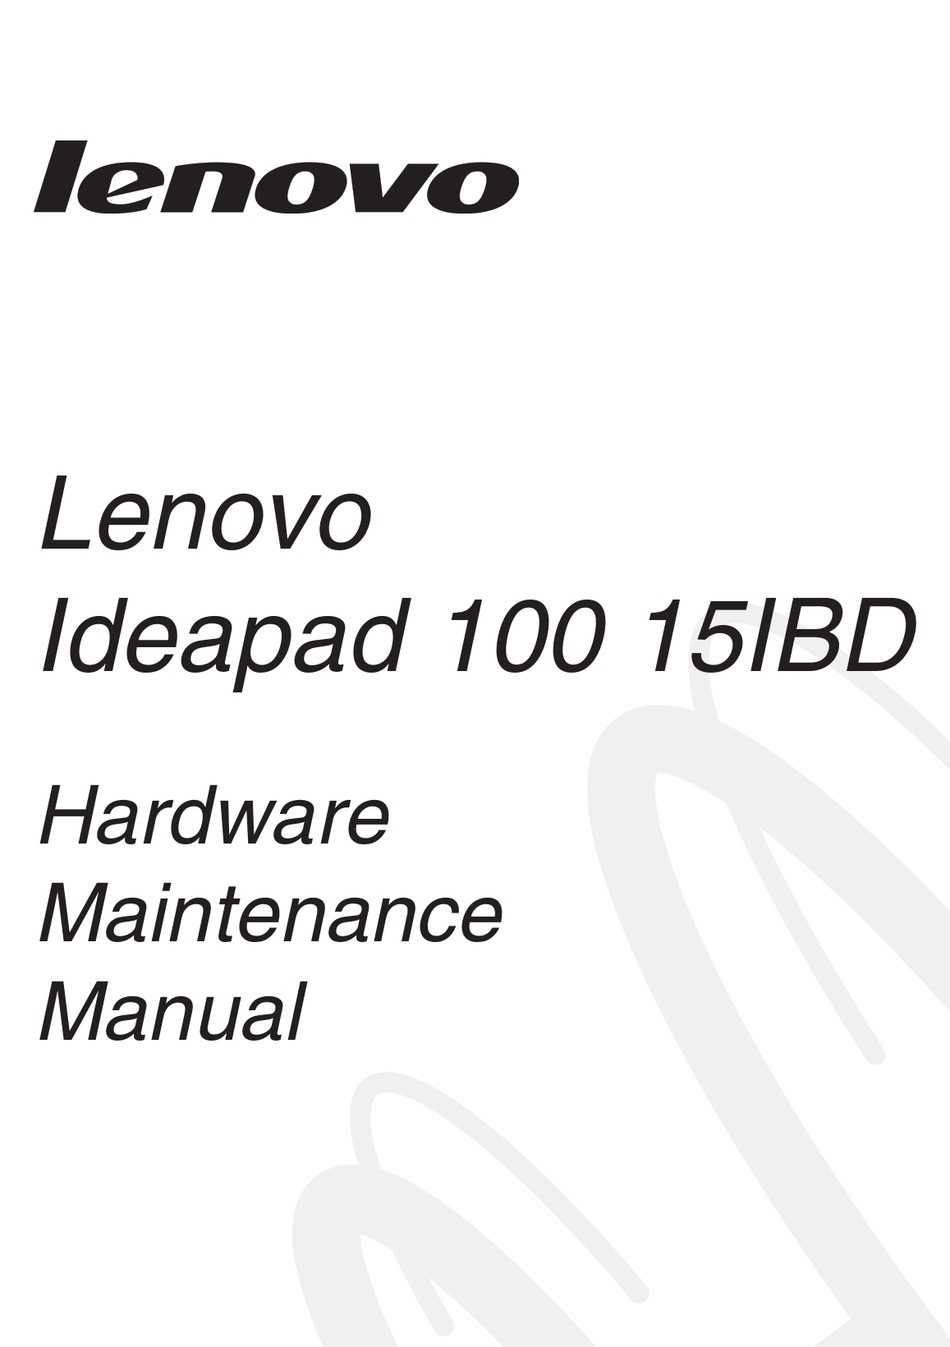 Lenovo Ideapad 100 15ibd Hardware Maintenance Manual Pdf Download Manualslib